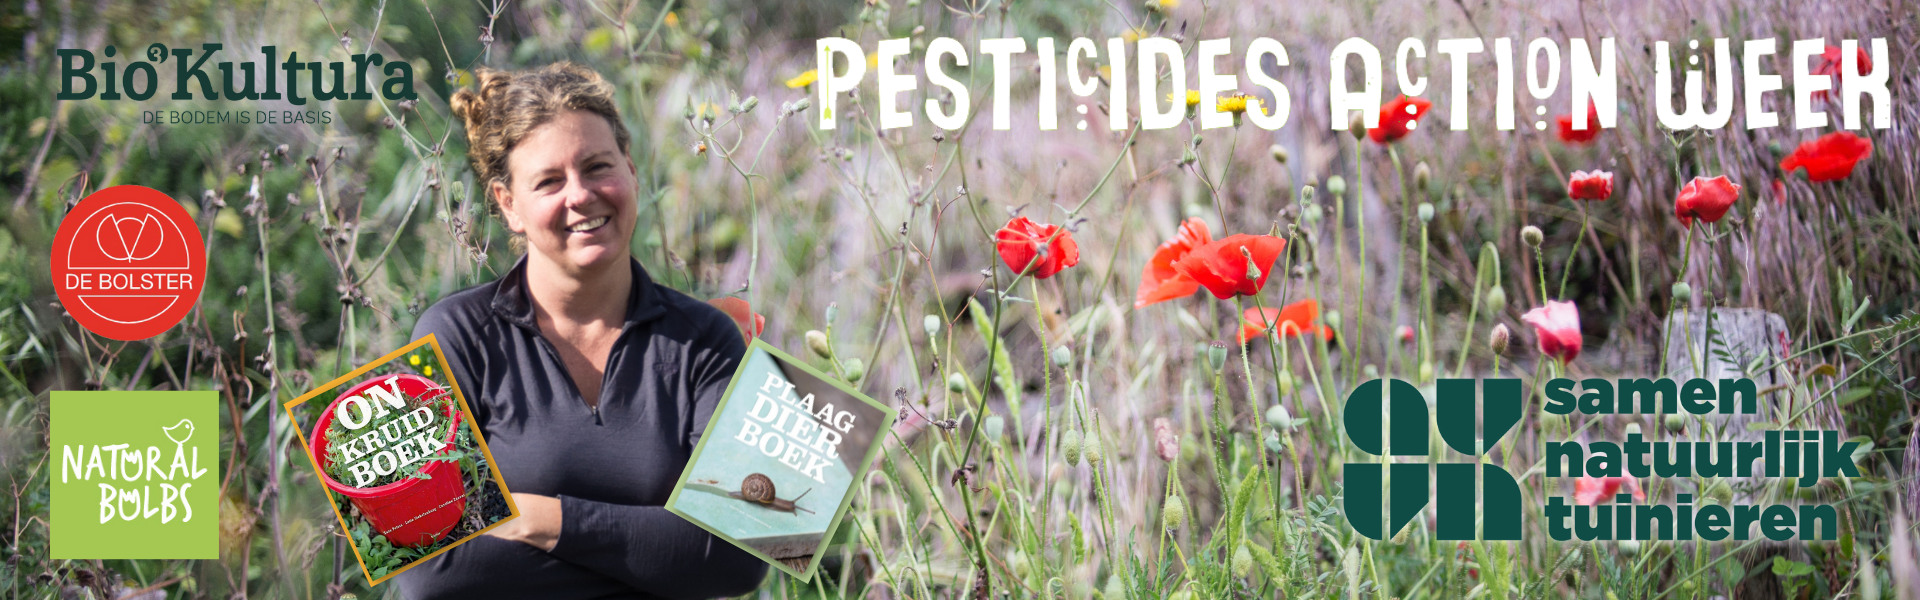 Pesticide Action week Suze Peters